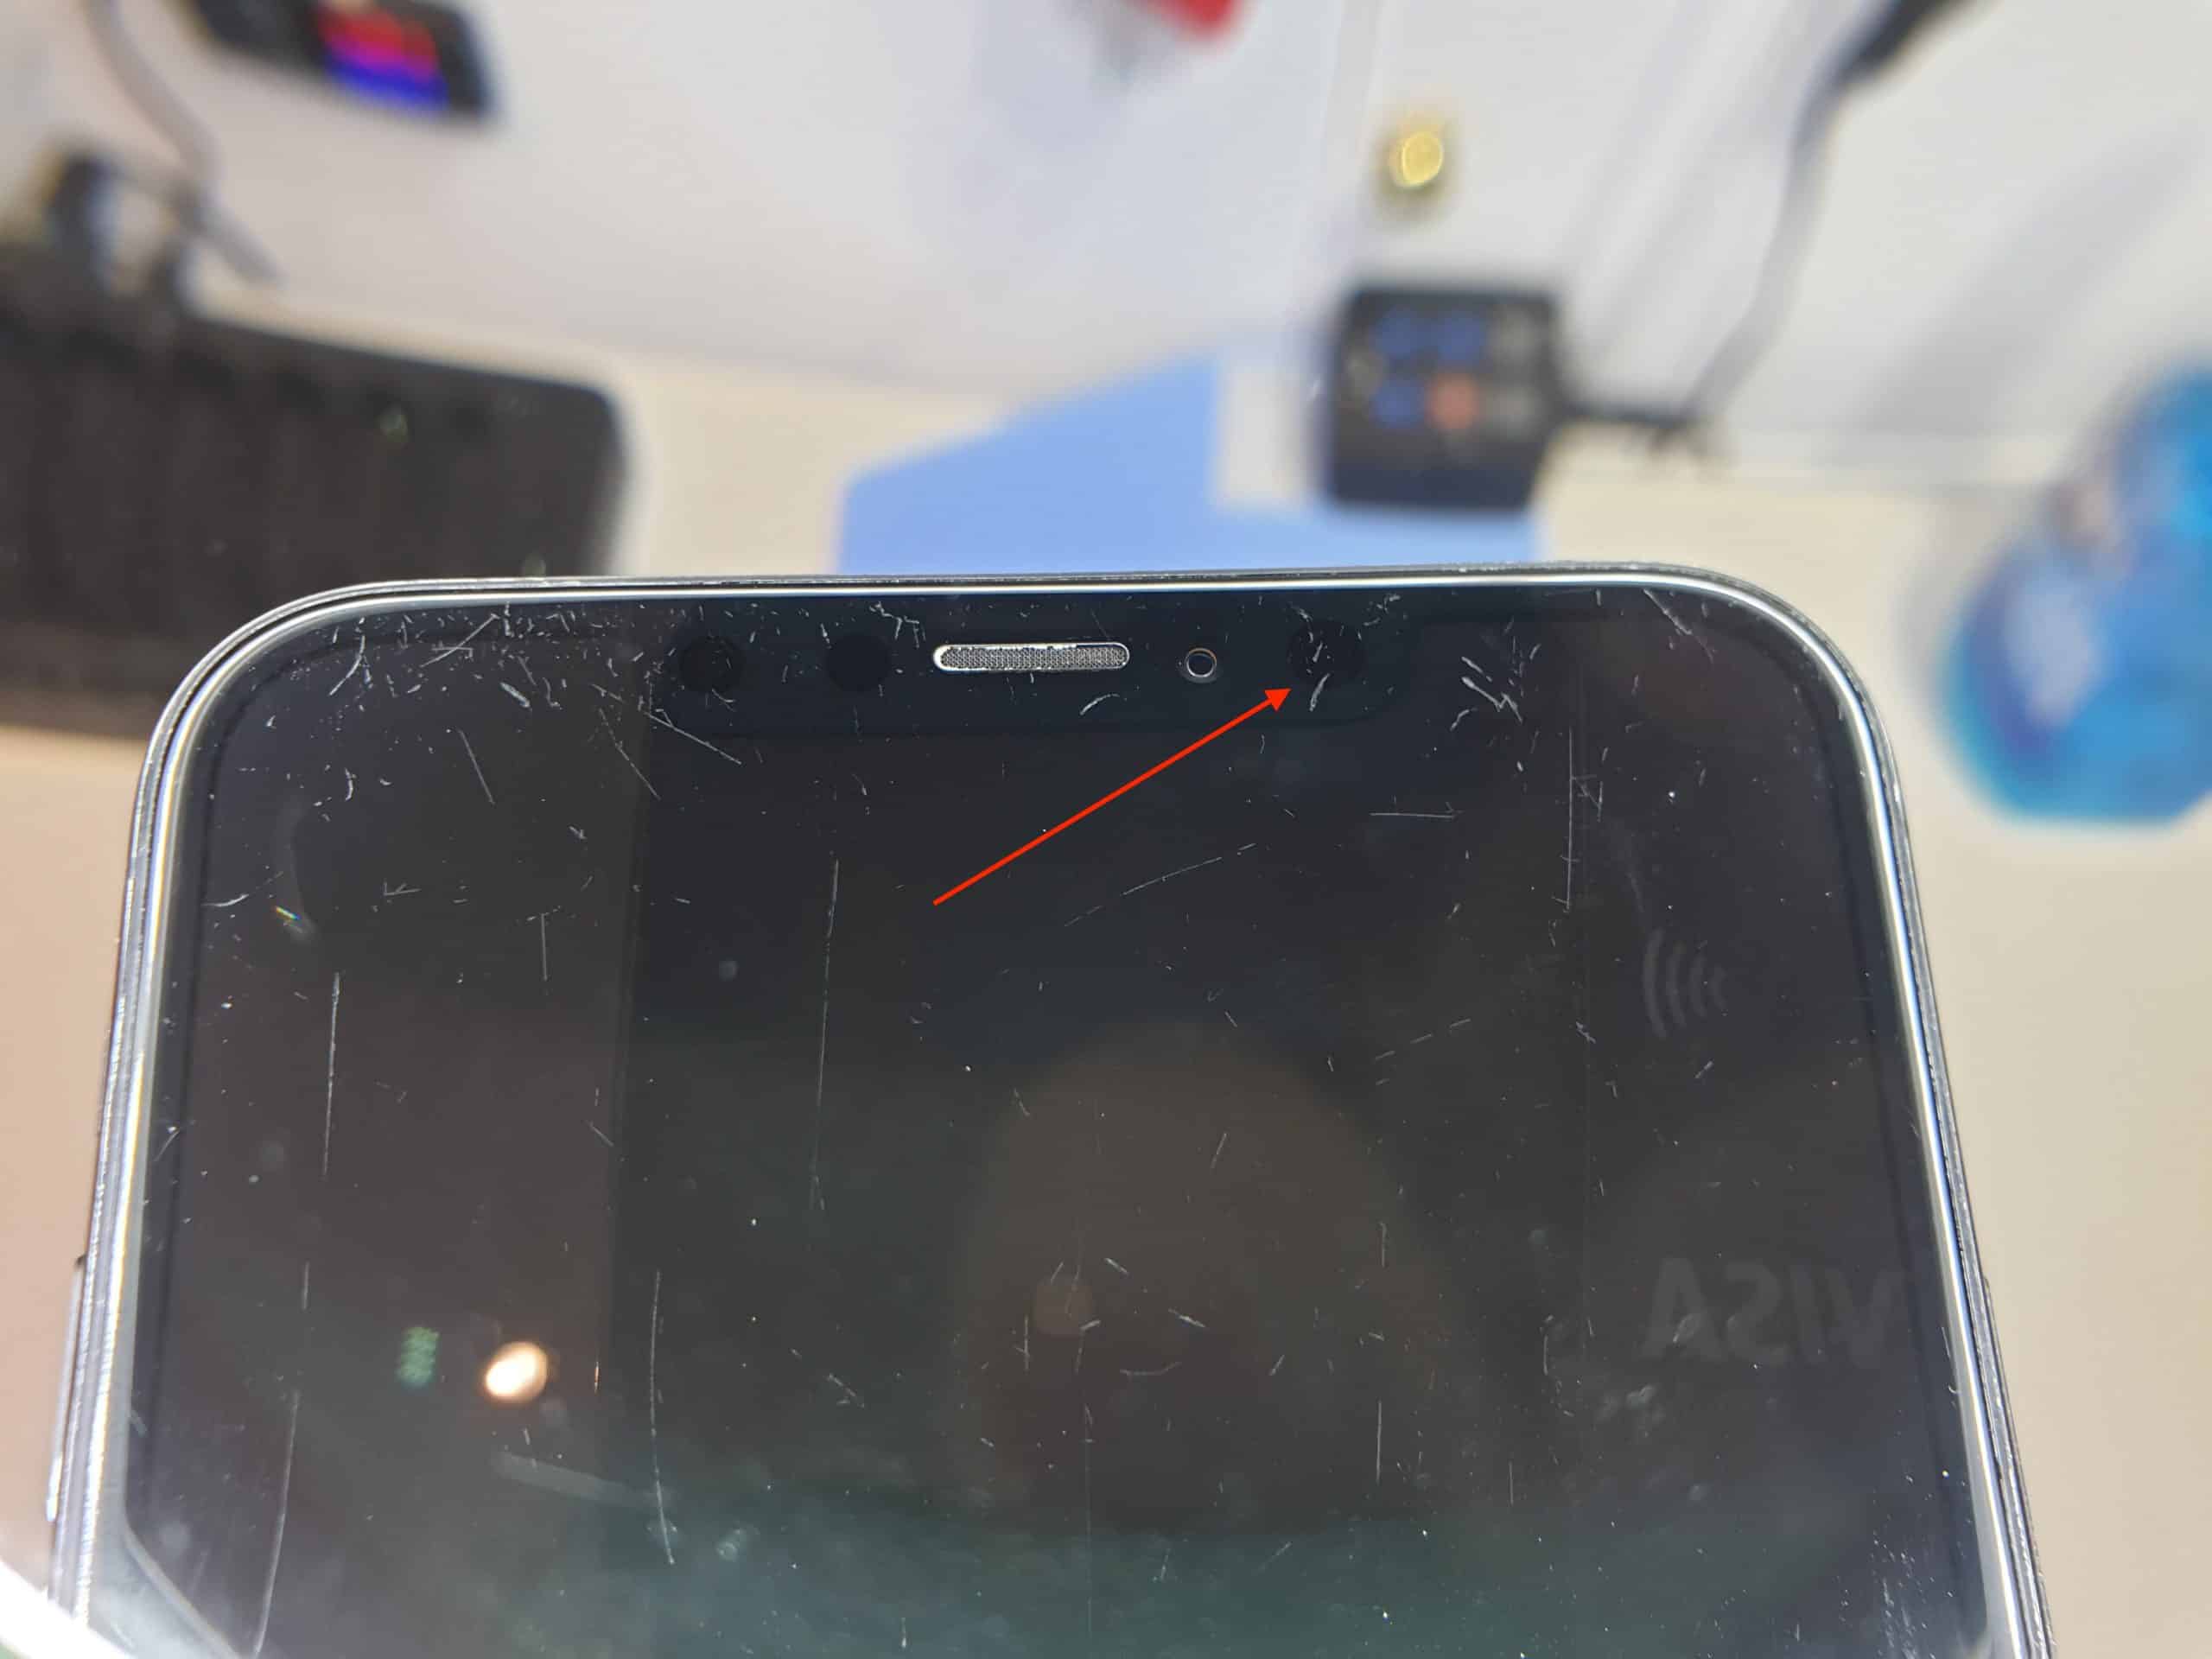 scratched XS Max affecting sensors.